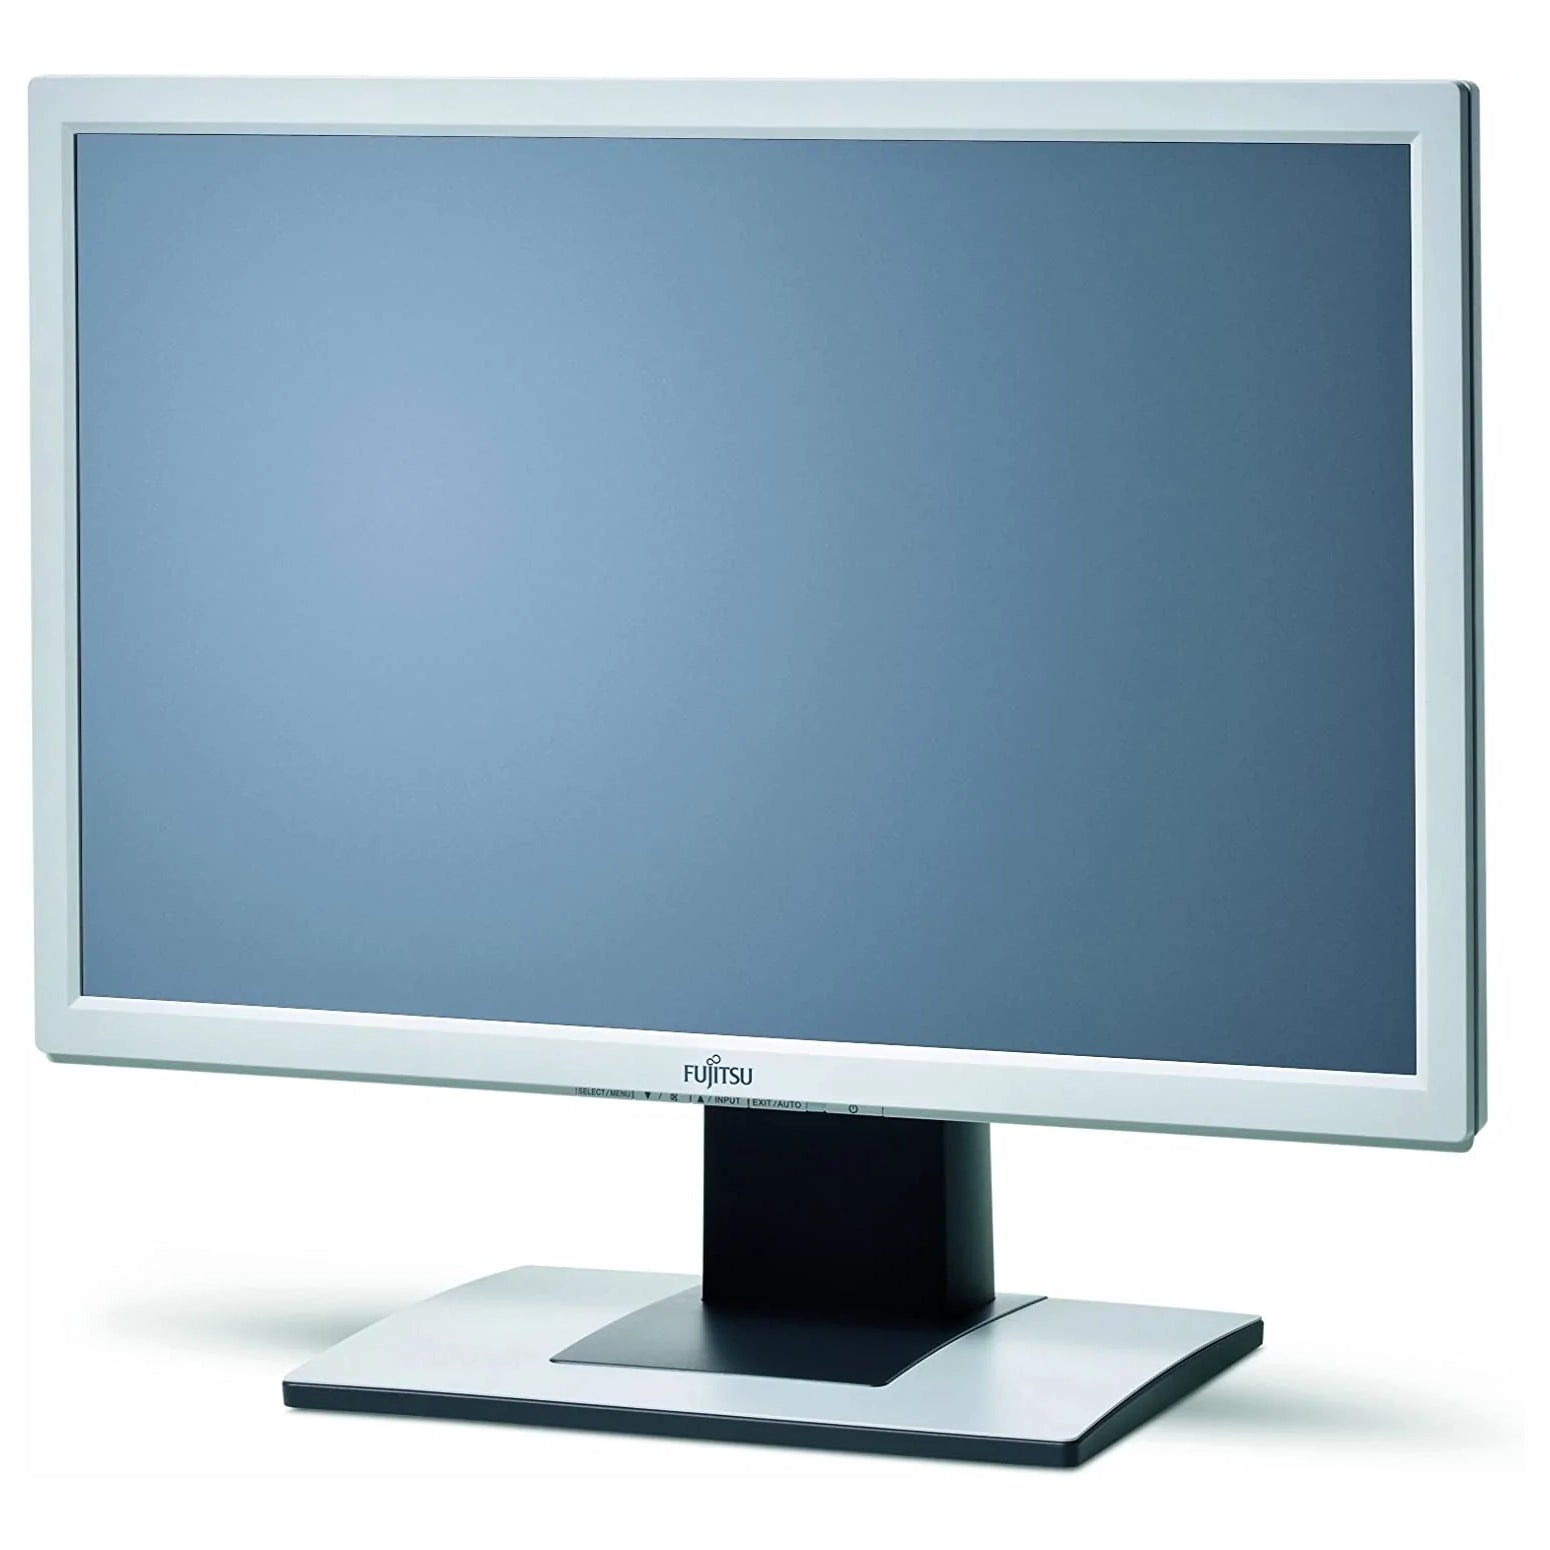 Fujitsu B24W-5 ECO 60,9 cm (24 Zoll) Widescreen TFT-Monitor